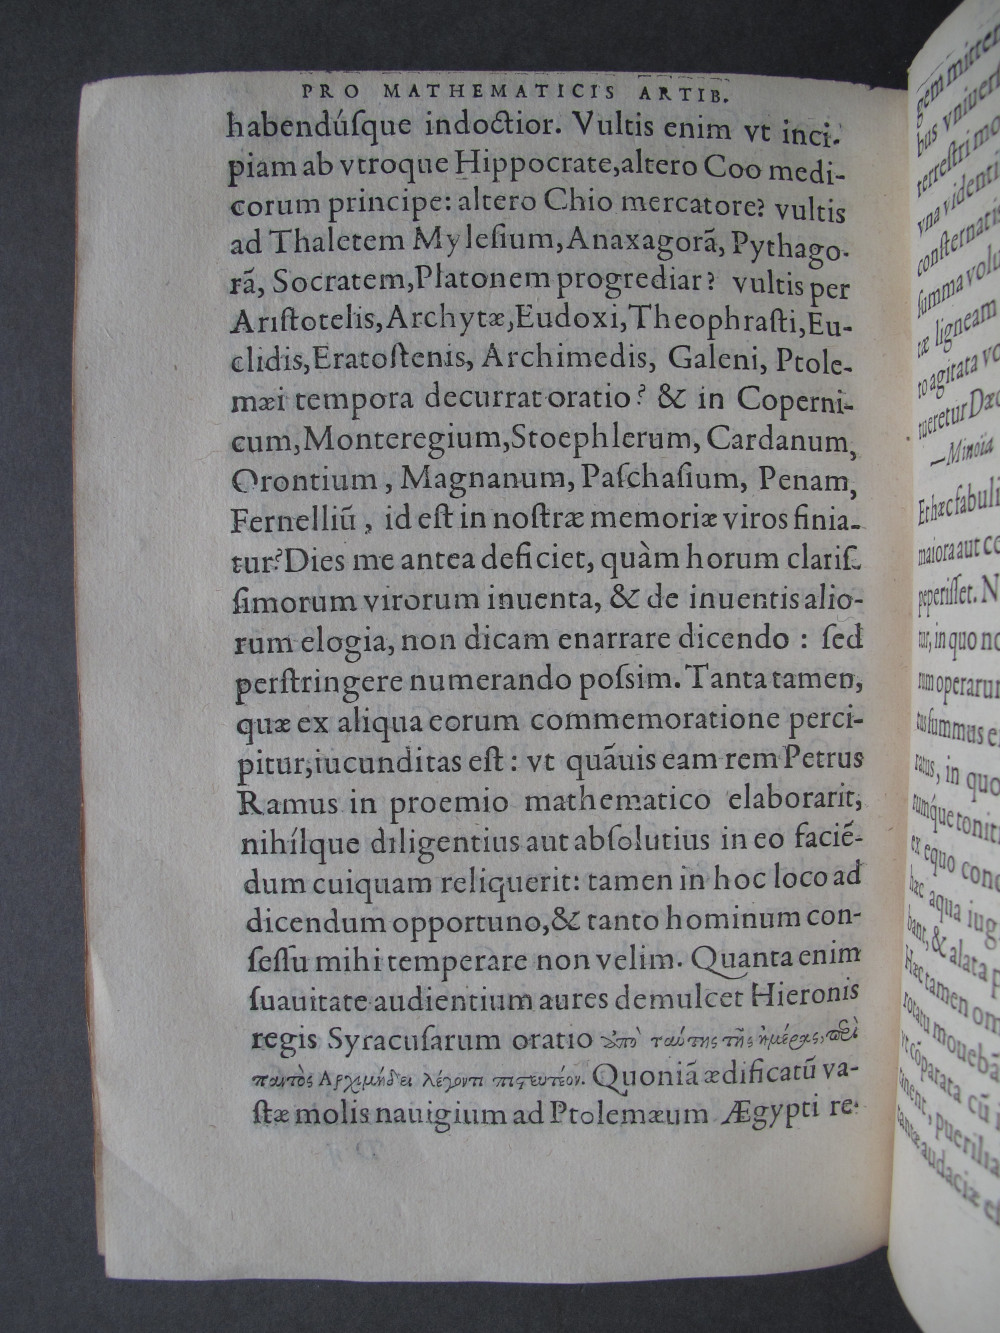 Folio 14 verso